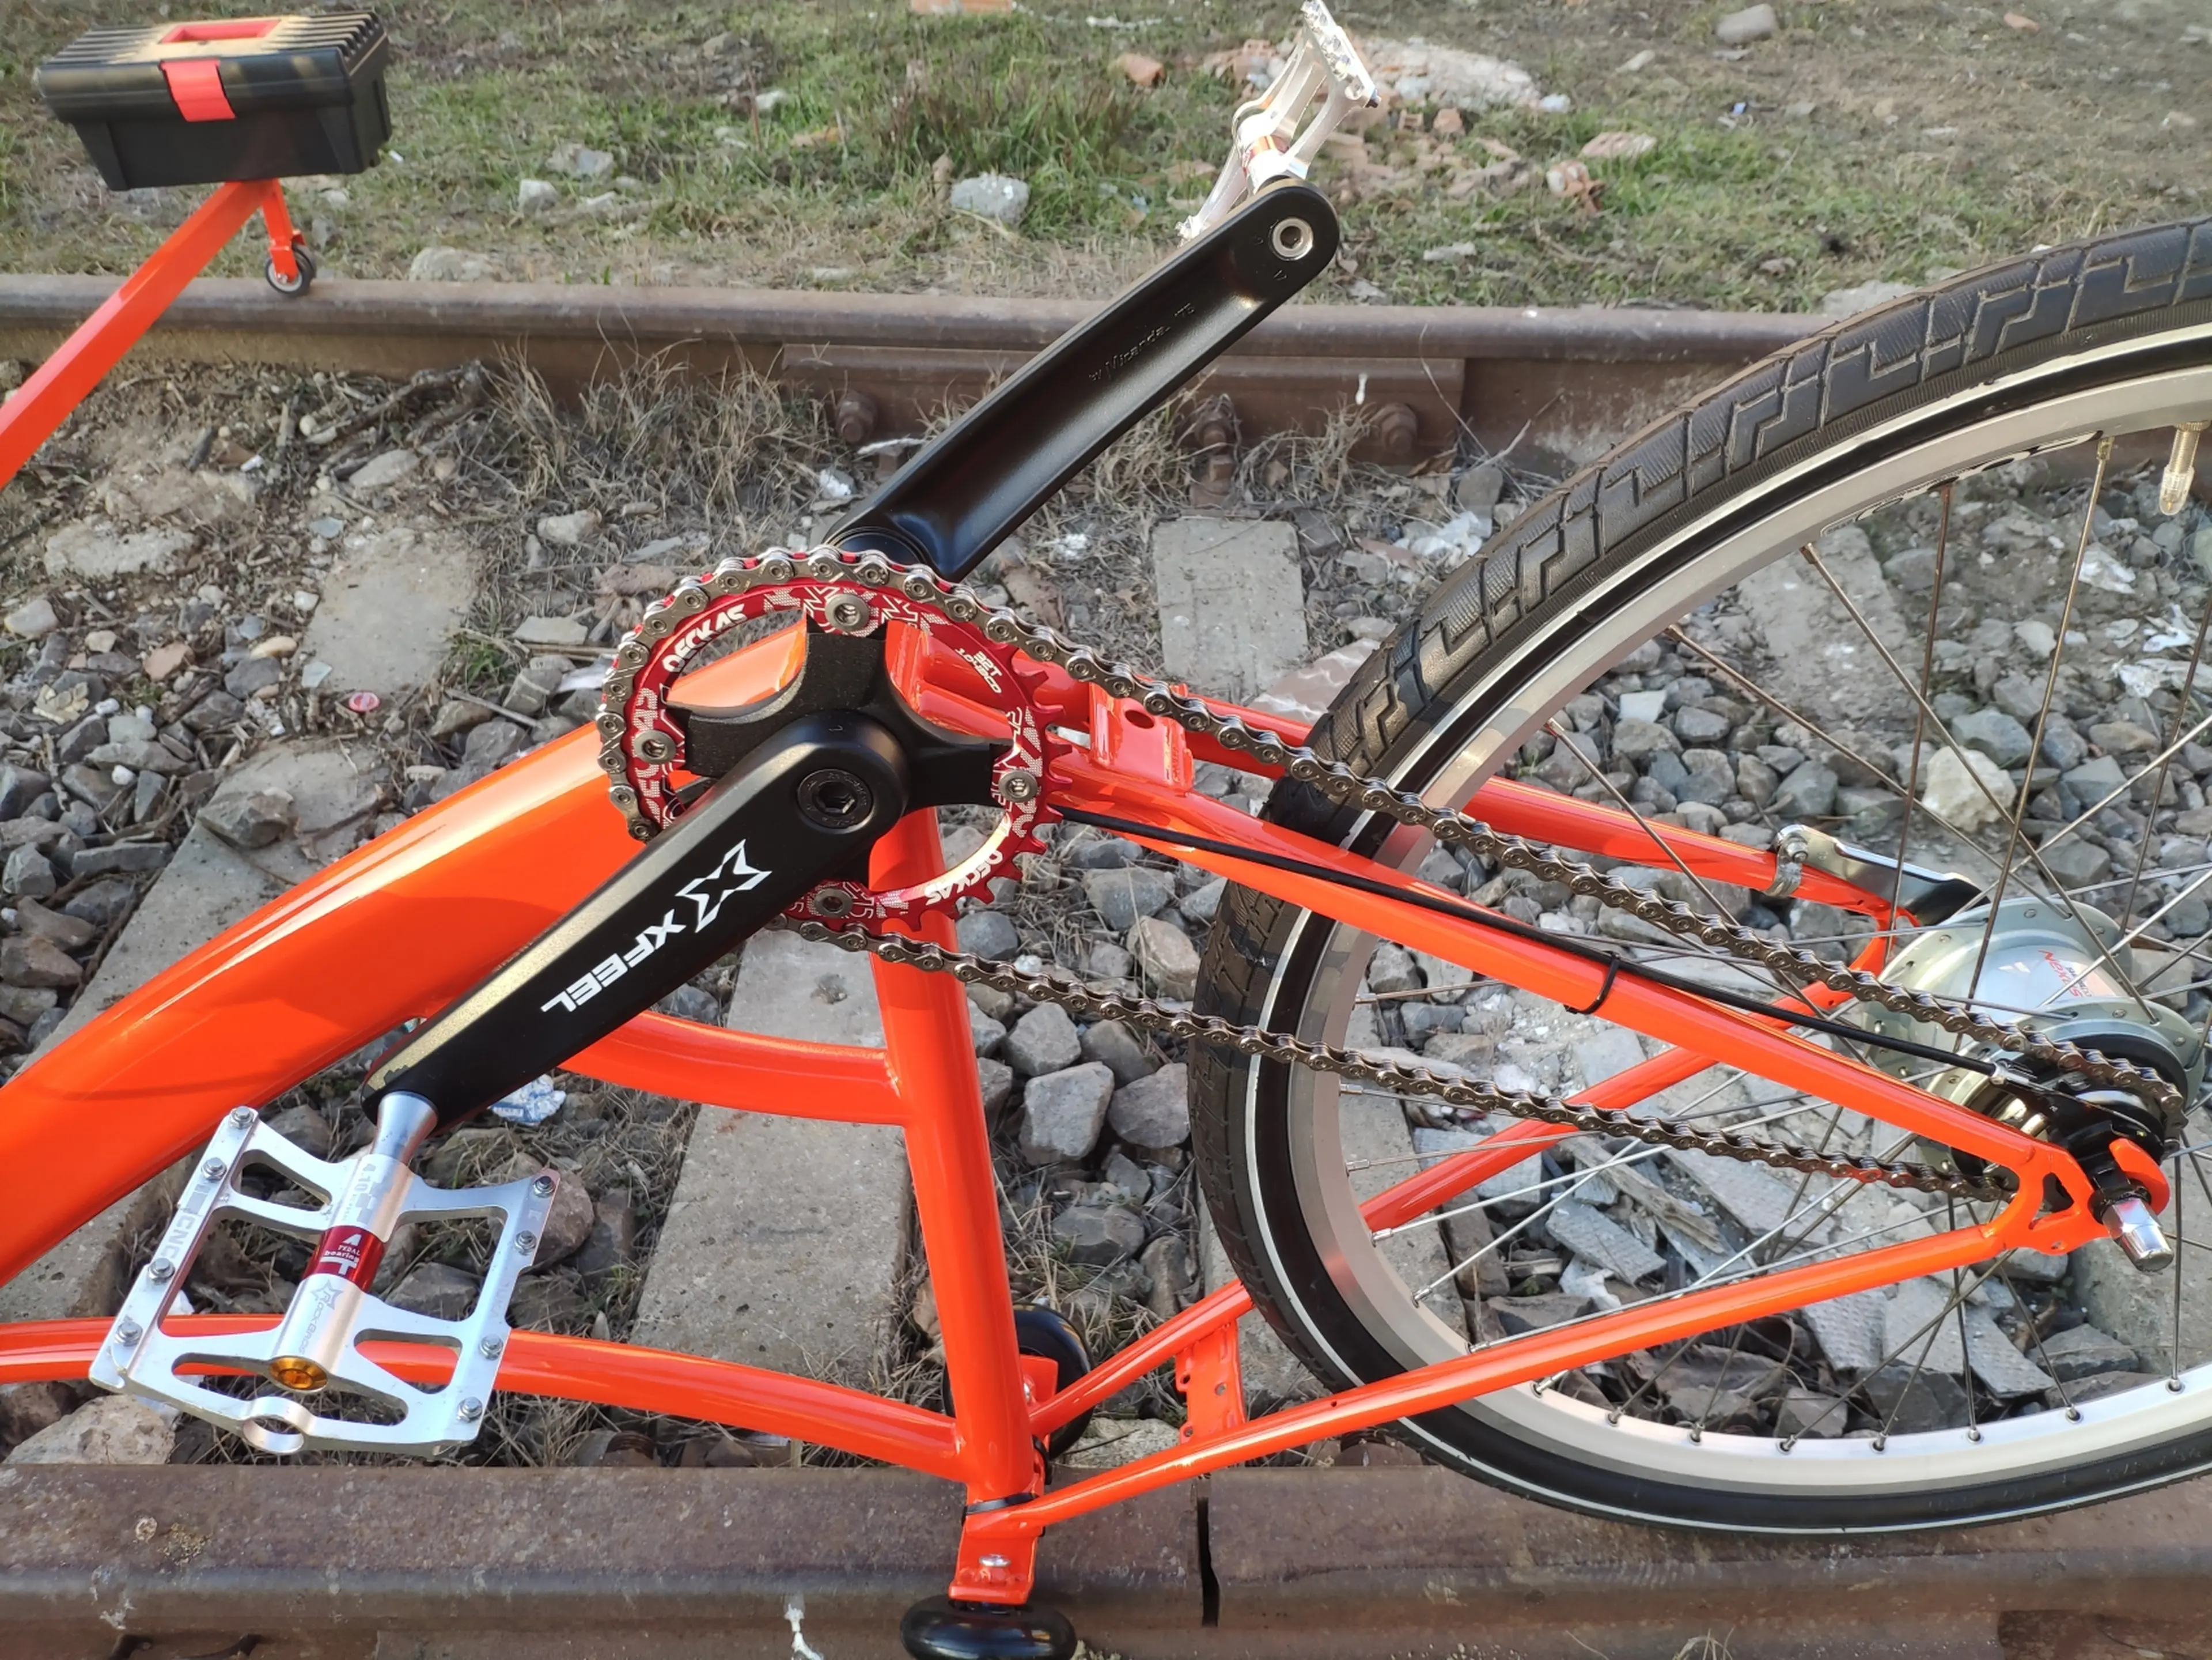 8. Railbike handcrafted